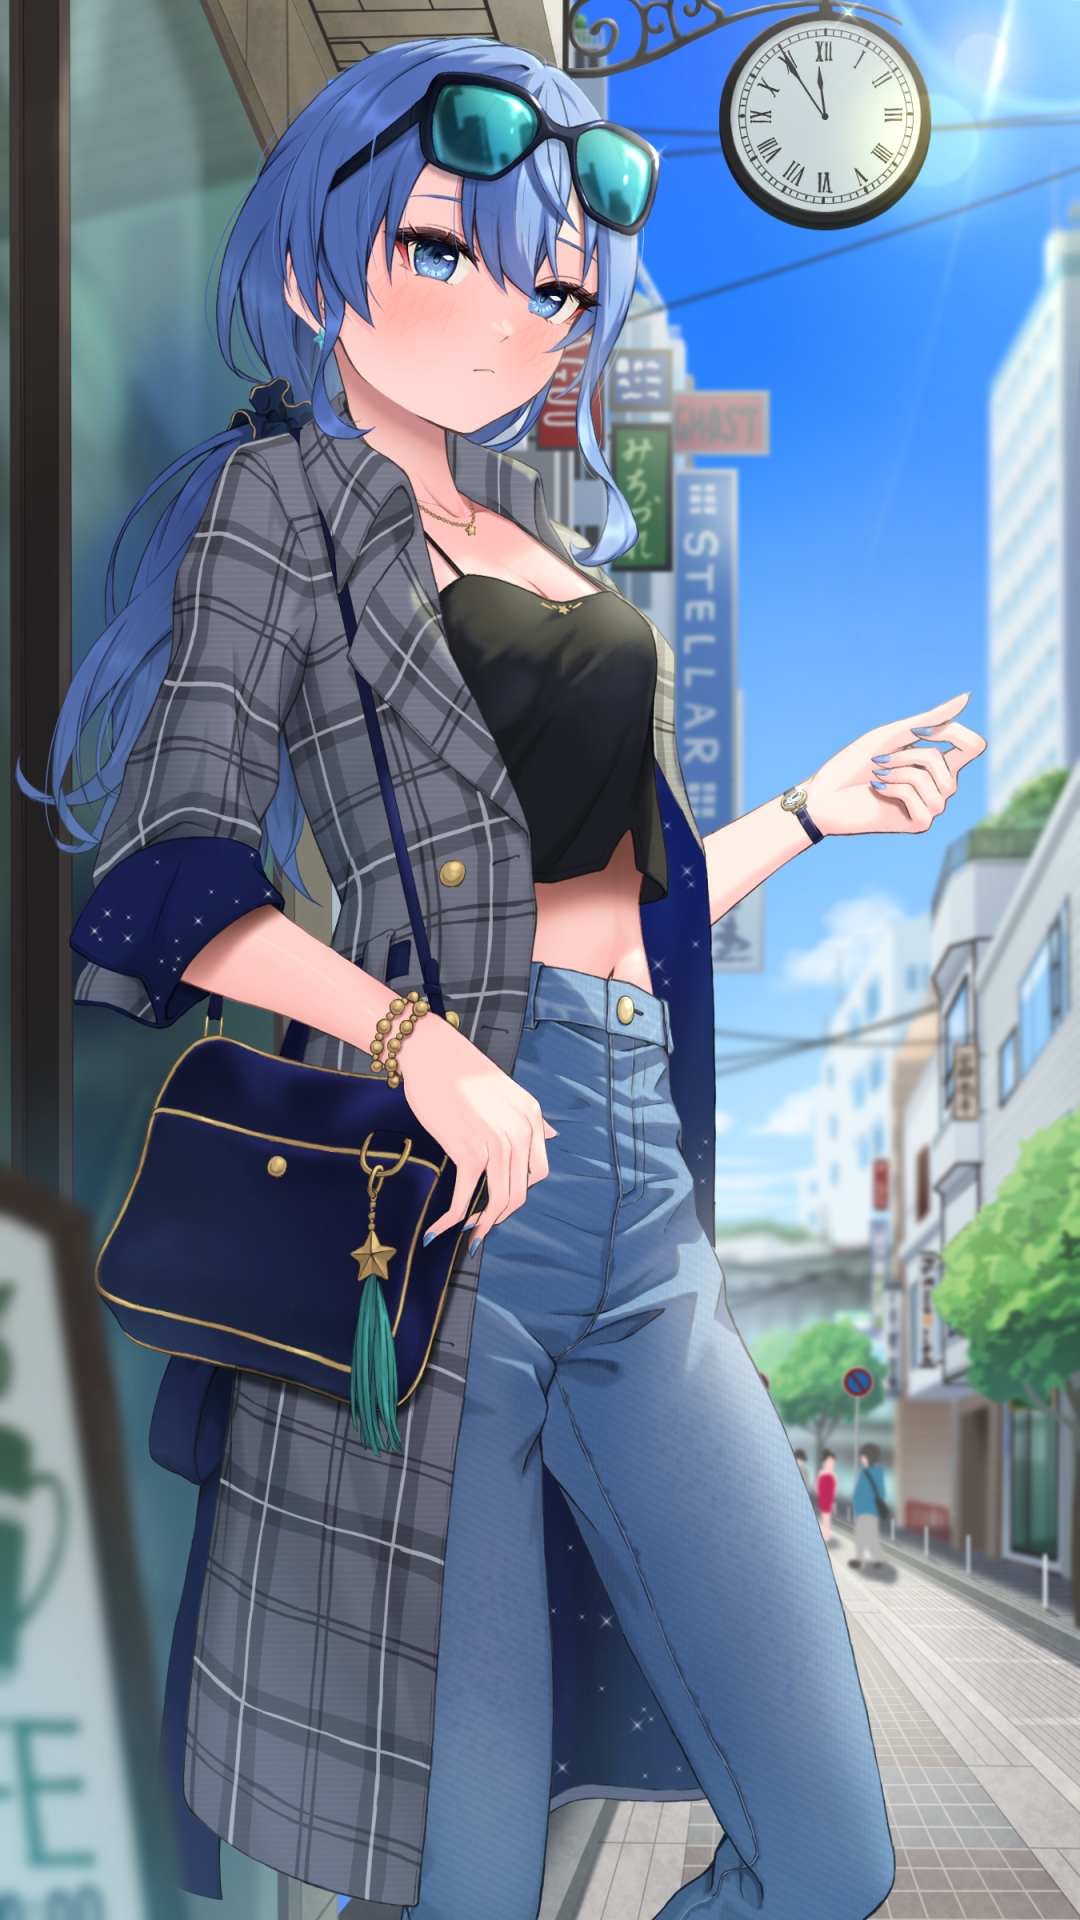 Anime Anime Girls Digital Art Artwork 2d Pixiv Bare Midriff Looking At Viewer Portrait Display